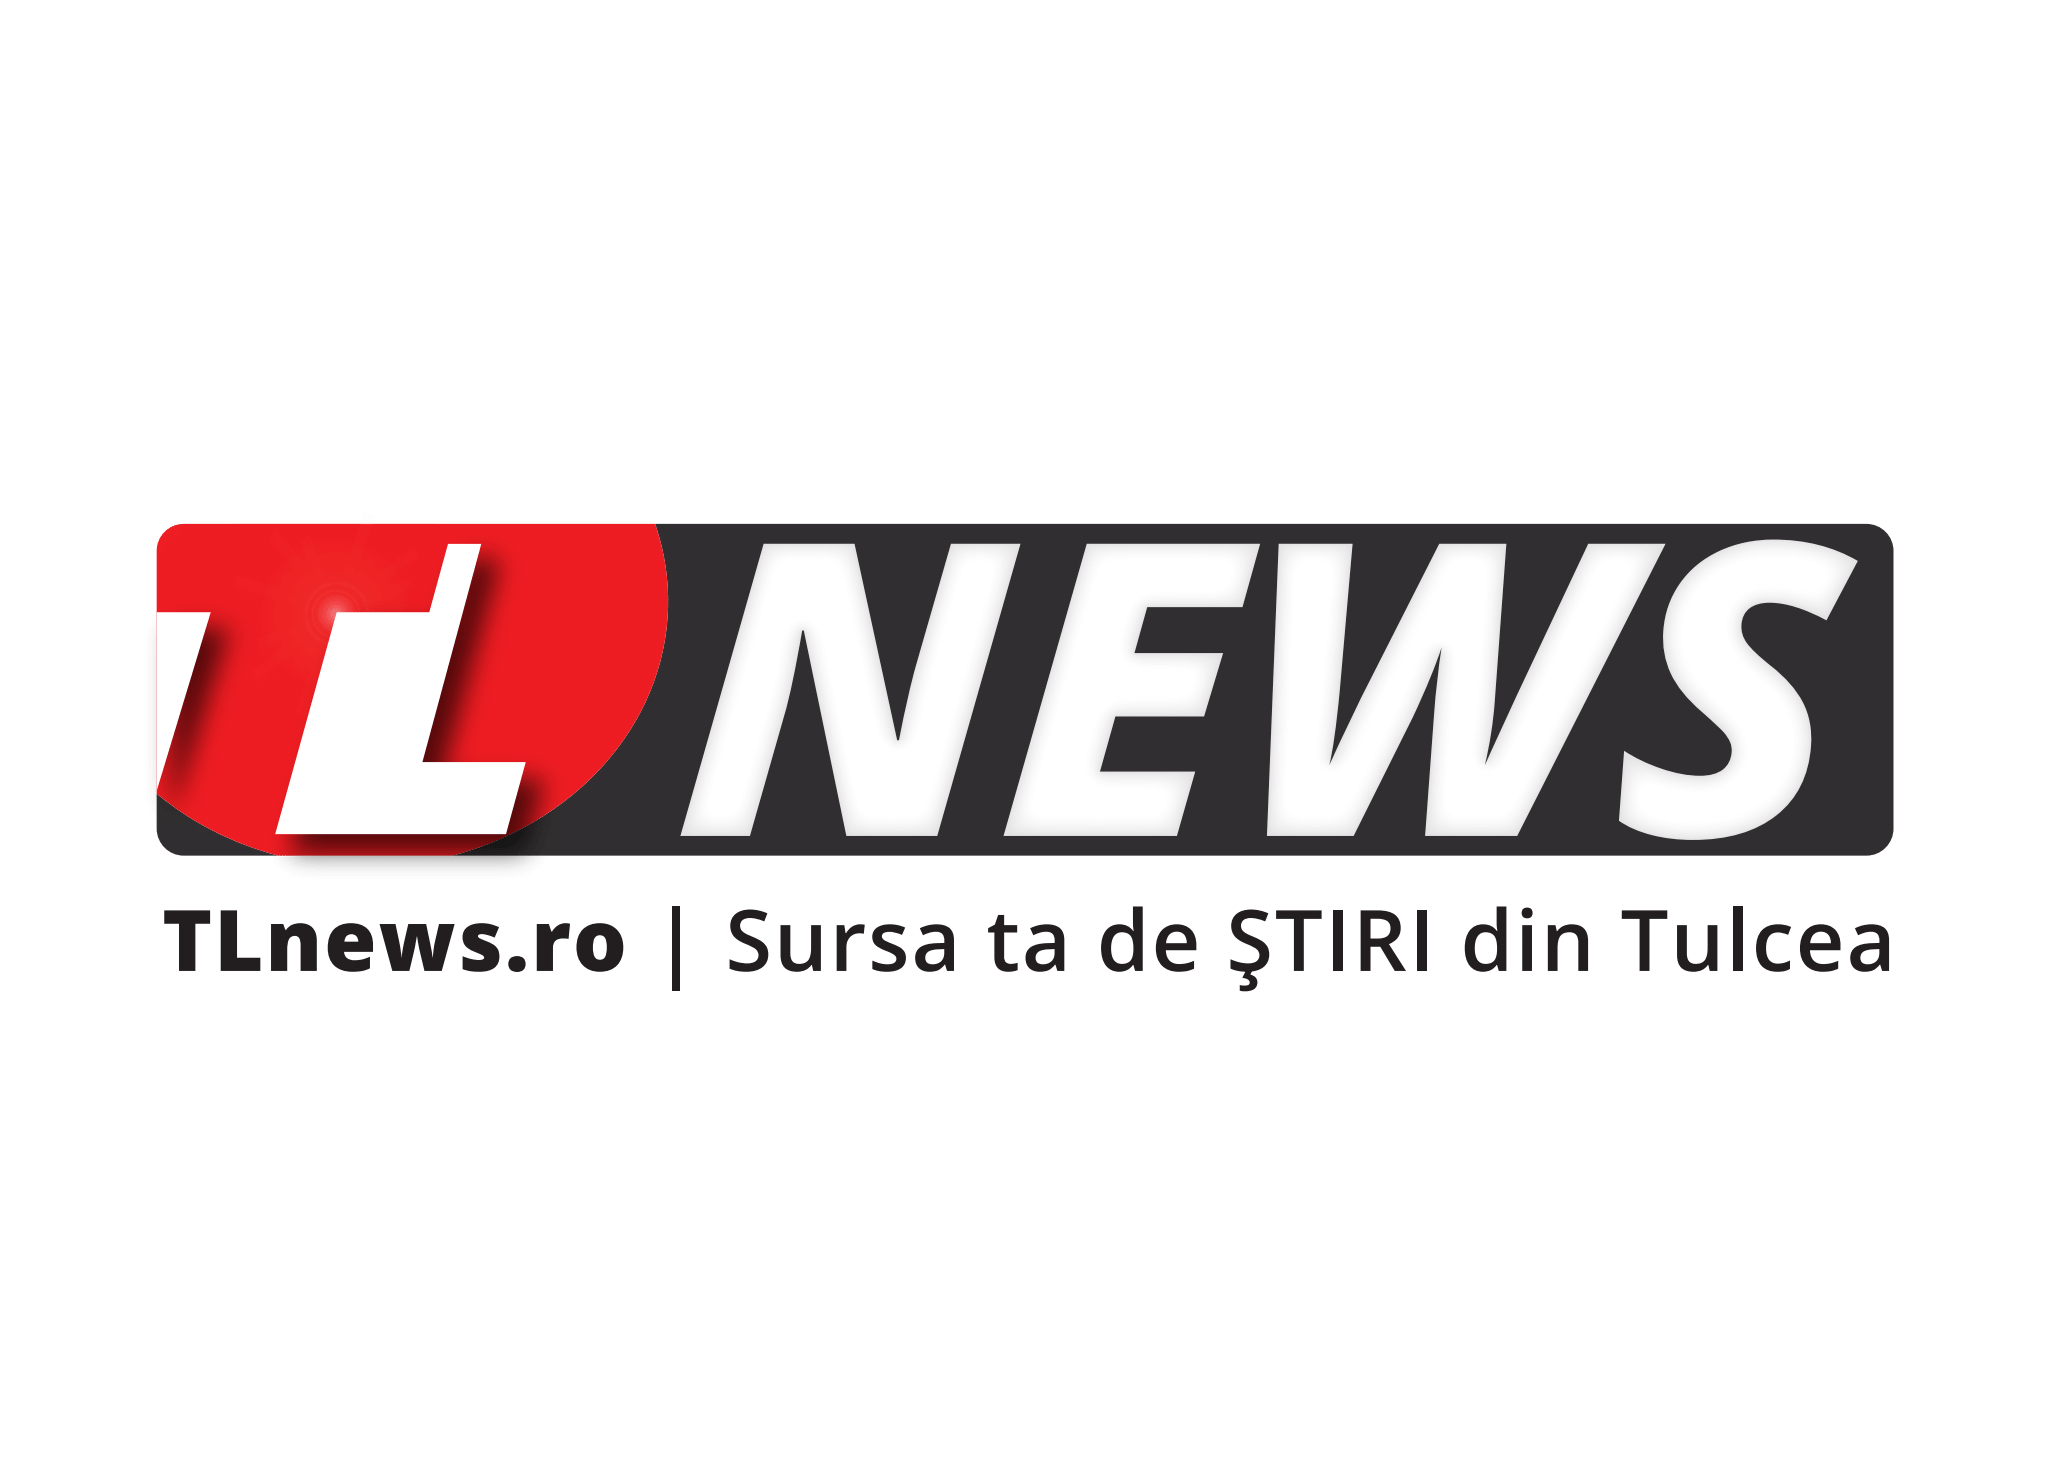 Logo Tl News